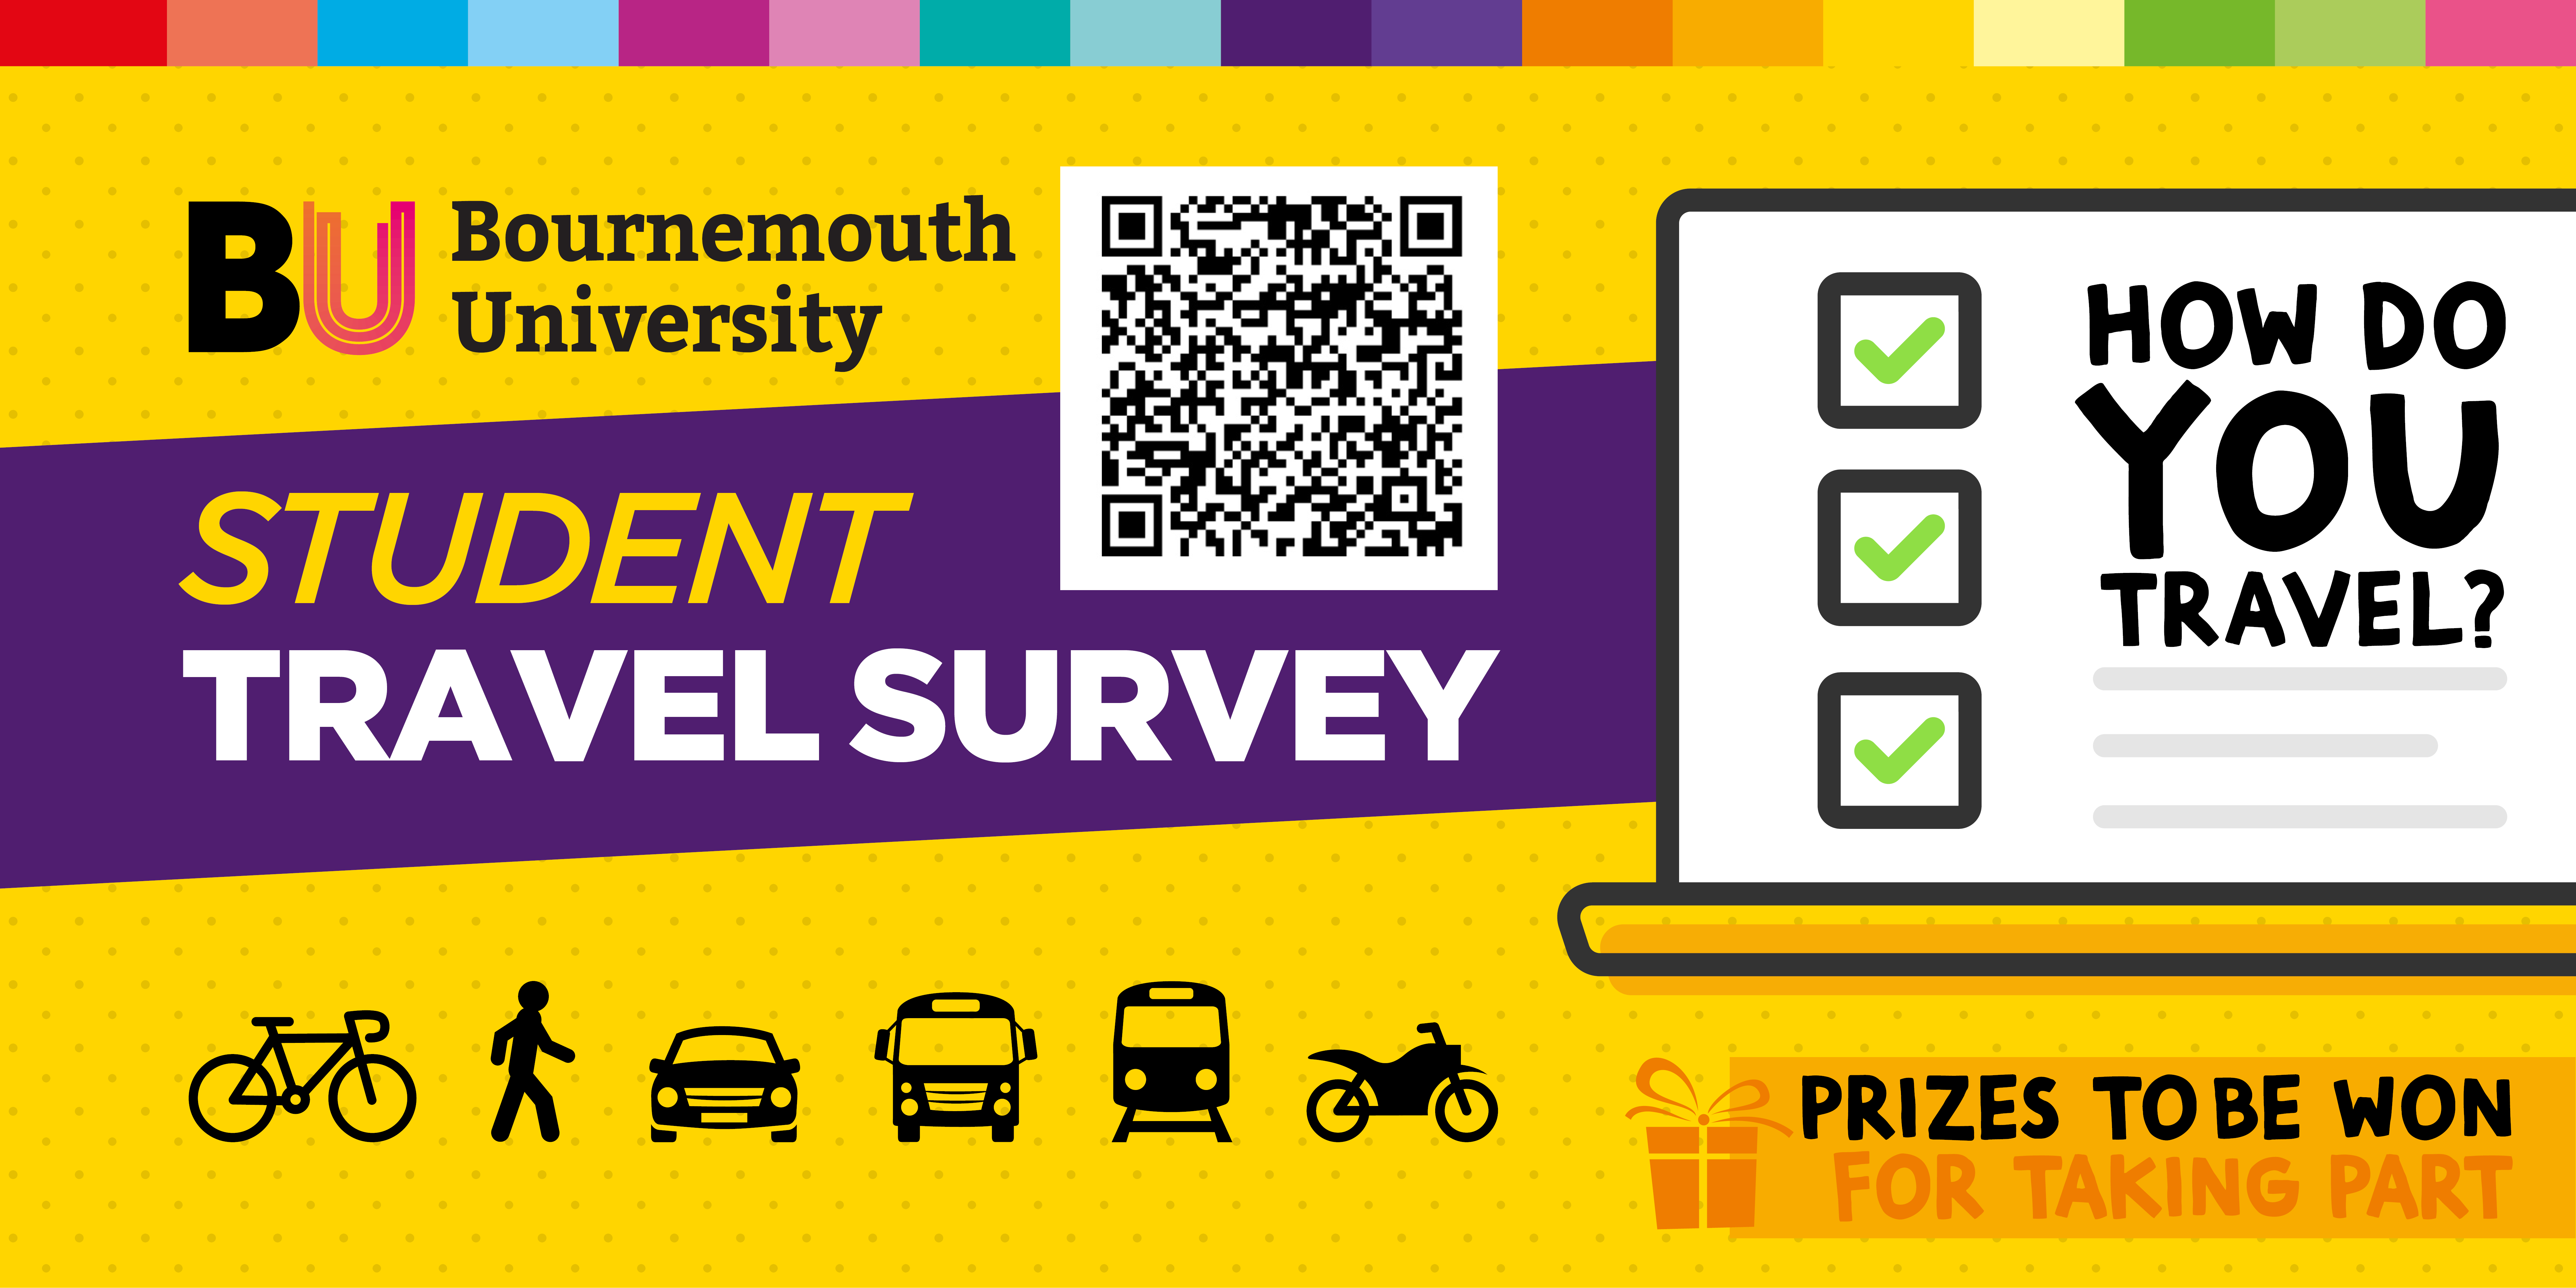 Bournemouth University student travel survey image with QR code